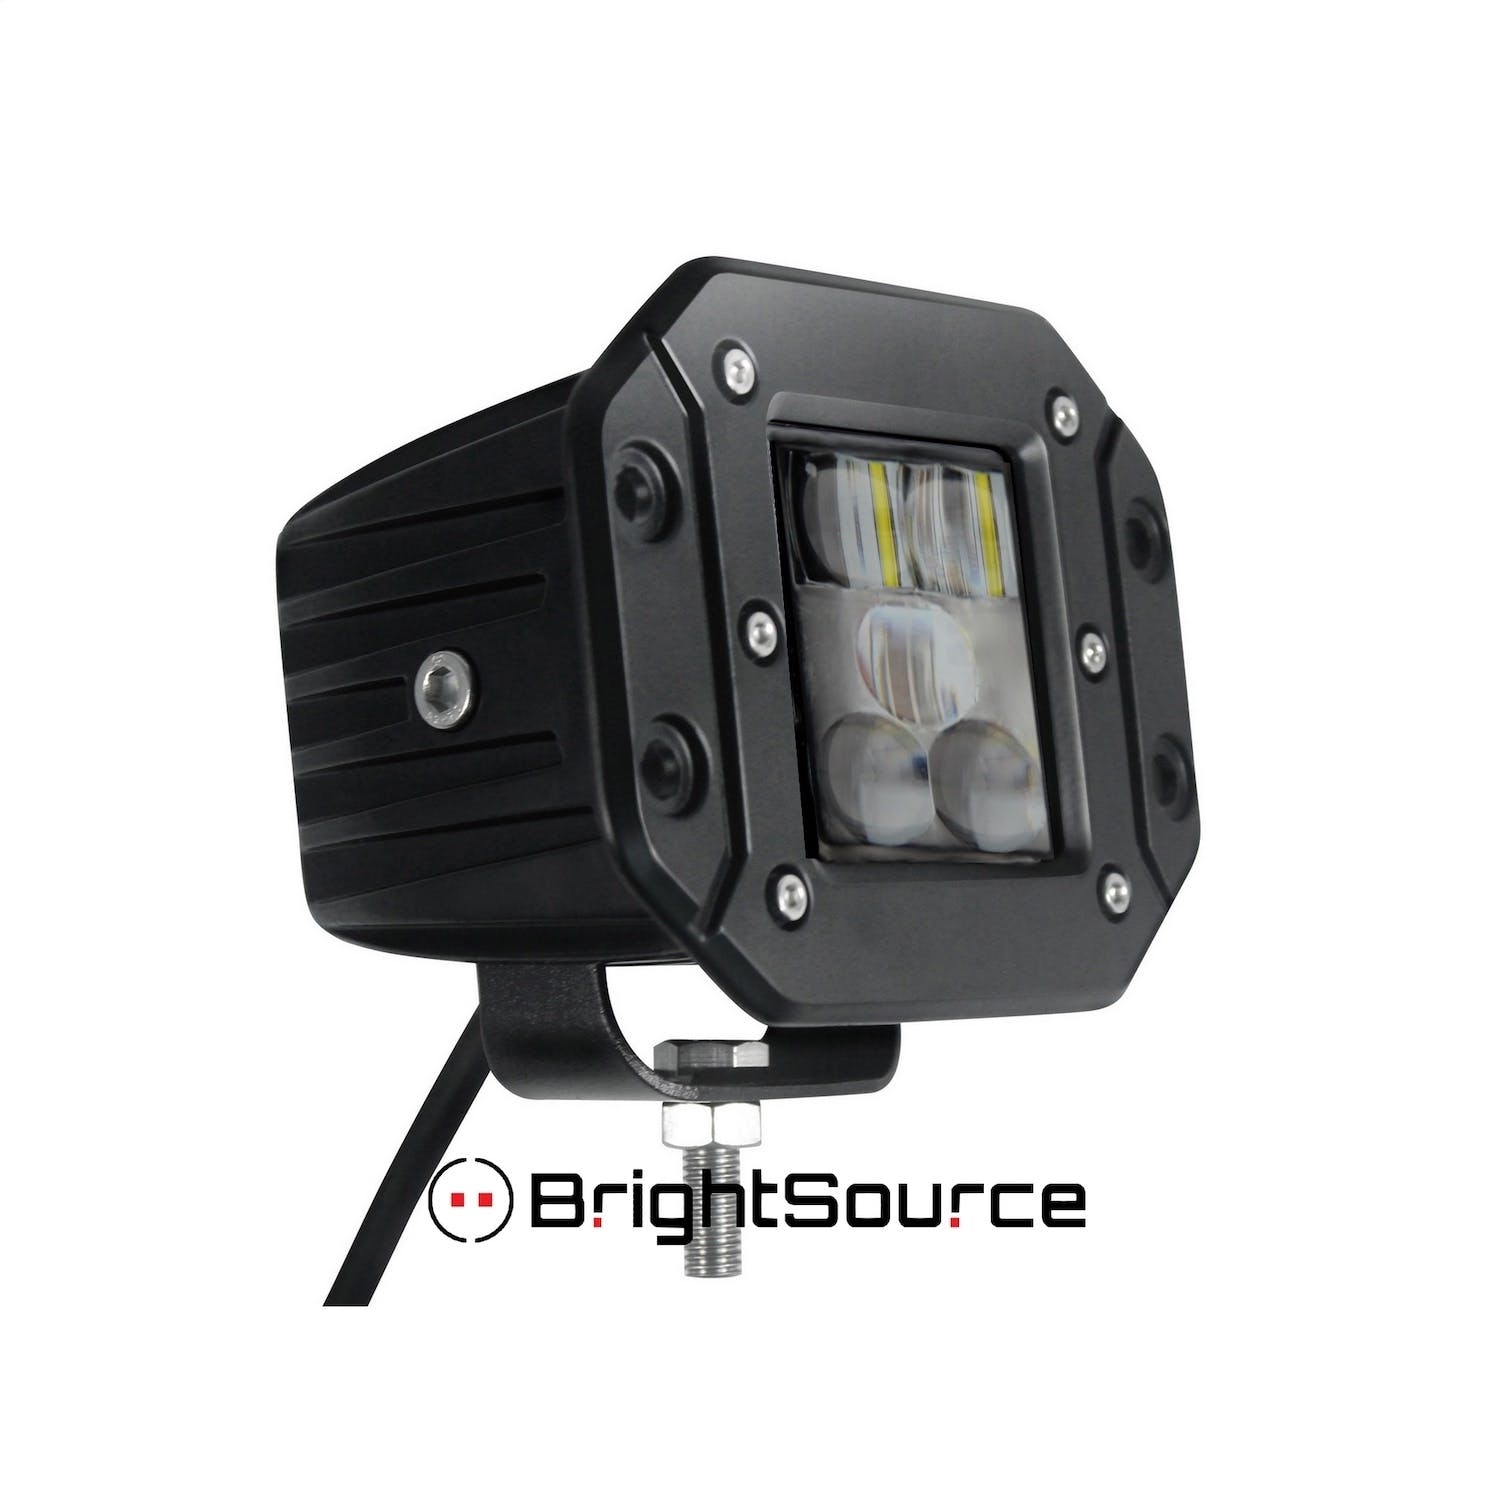 BrightSource 75002F Cube Light Kit